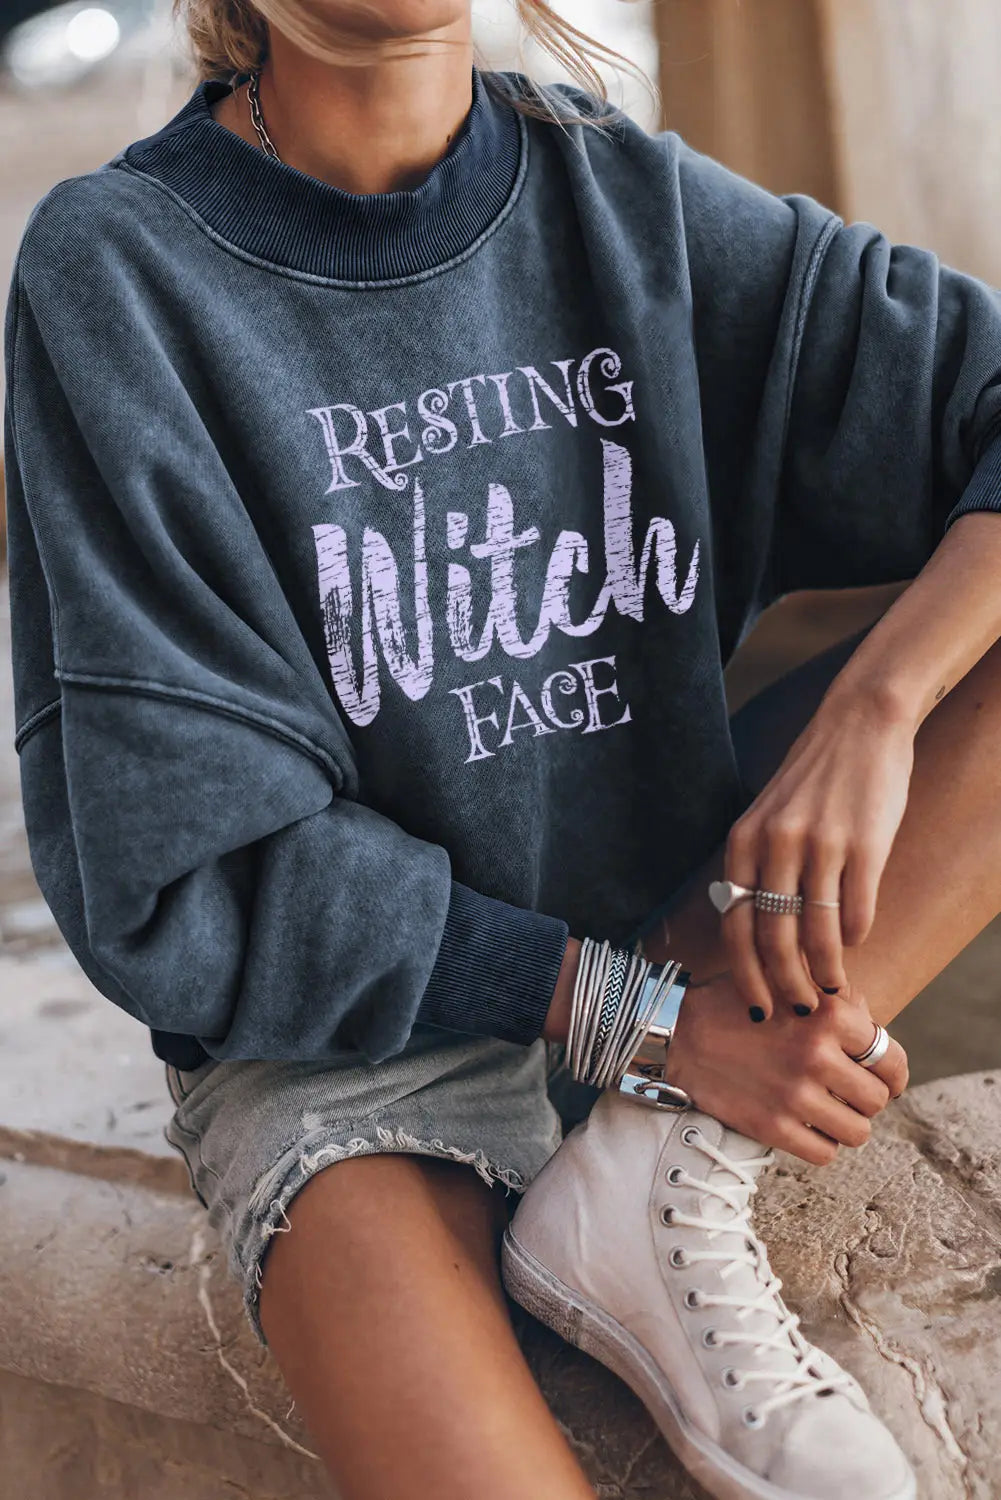 Sky blue resting witch face graphic drop shoulder sweatshirt - sweatshirts